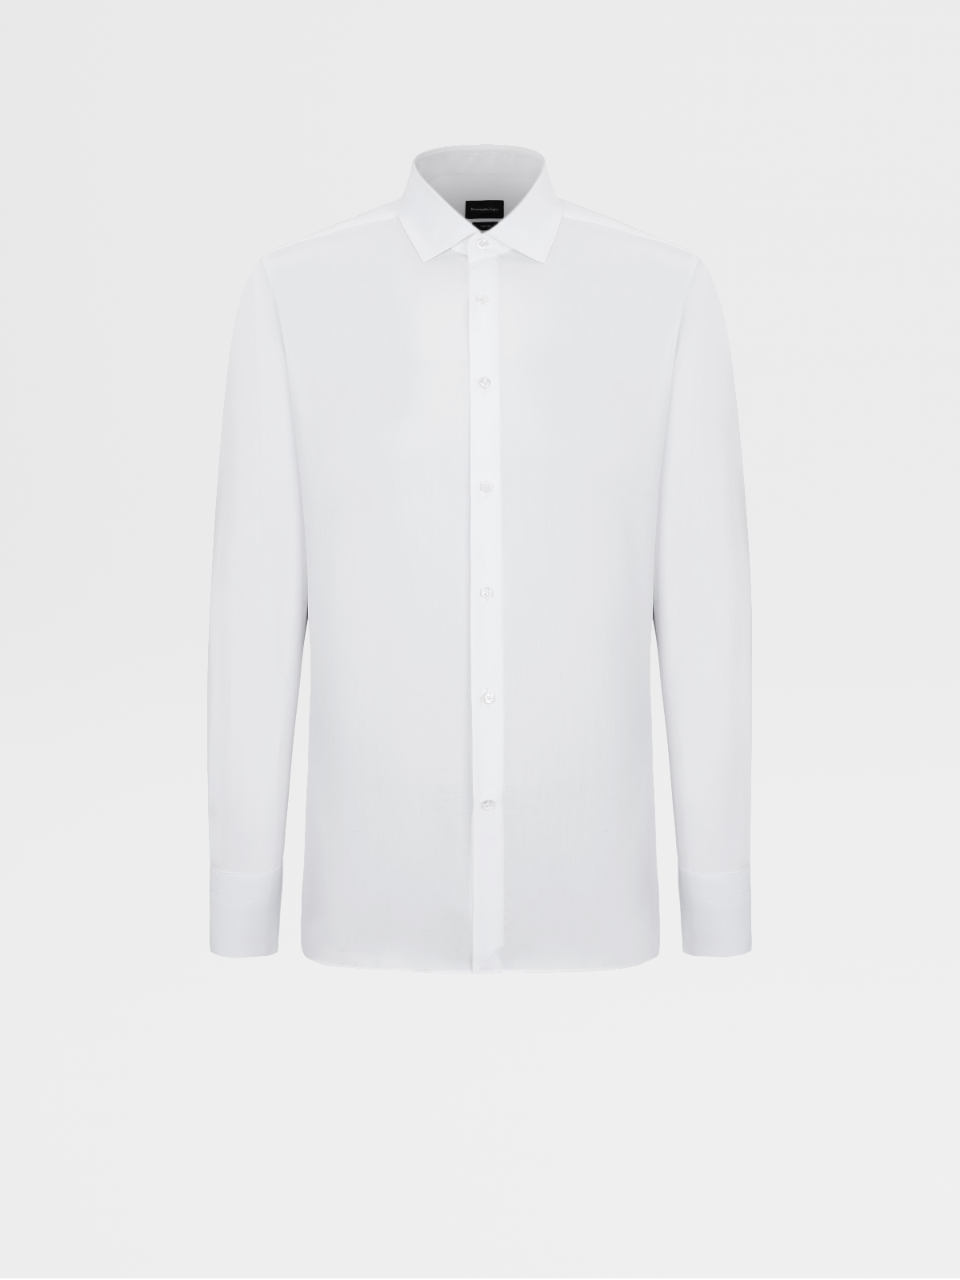 Micro-textured White Trofeo™ Cotton Tailoring Shirt, Milano Regular Fit